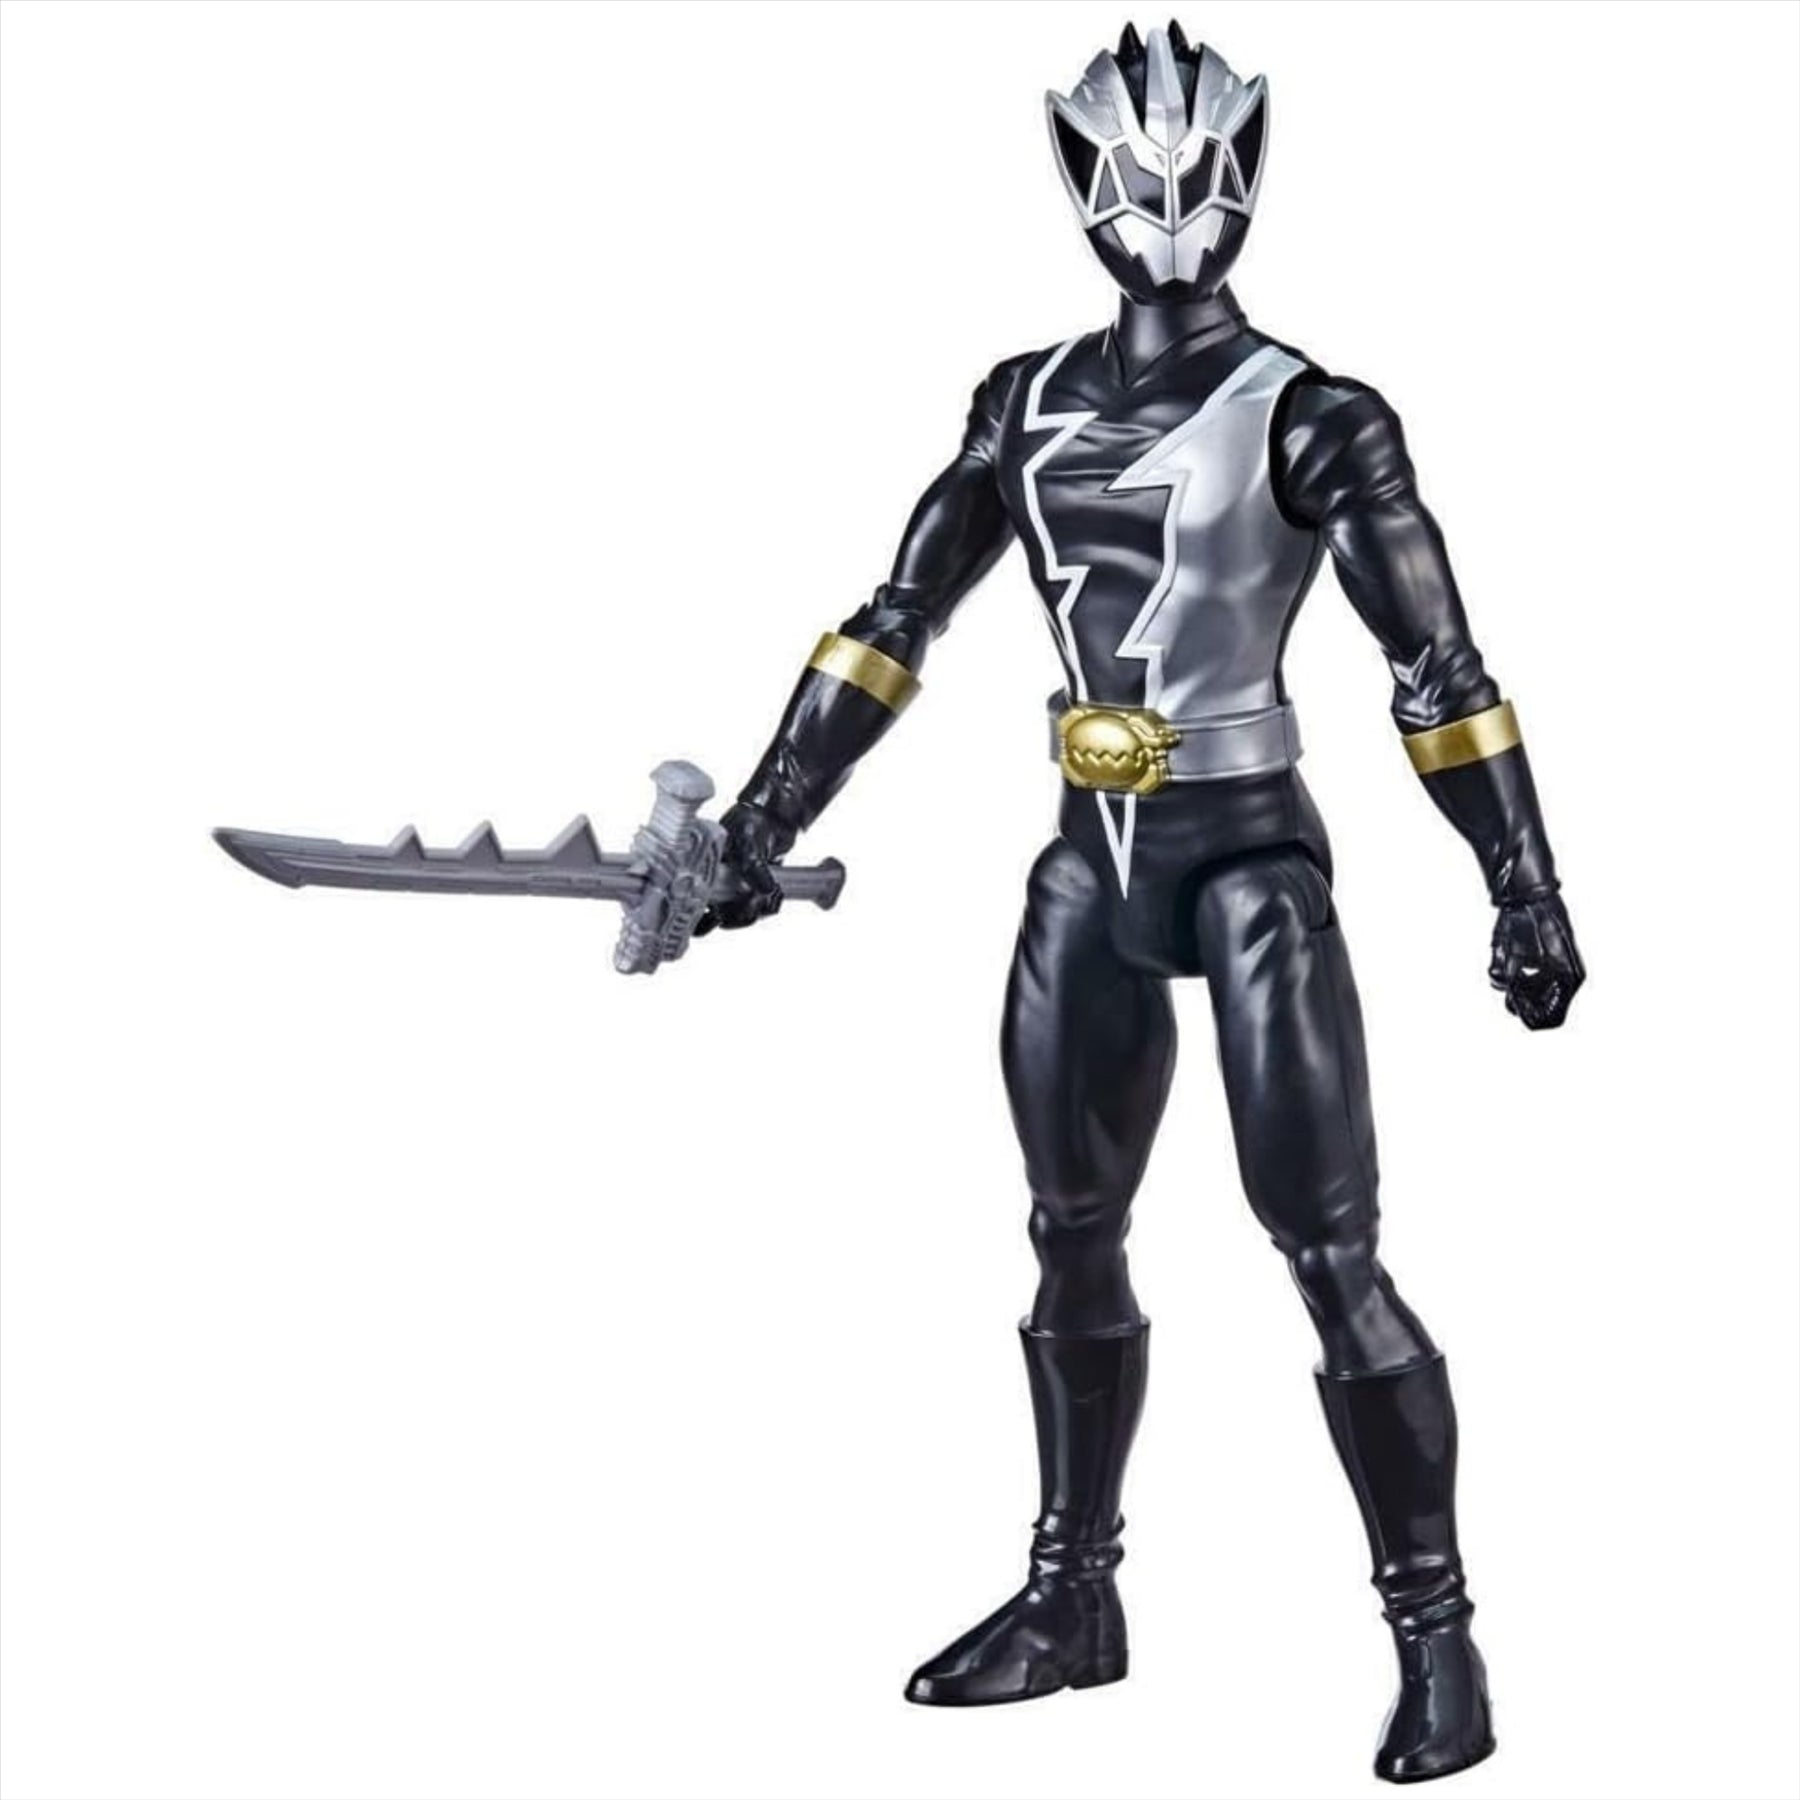 Power Rangers Dino Fury - 11" 28cm Articulated Action Figure - Black Ranger - Toptoys2u